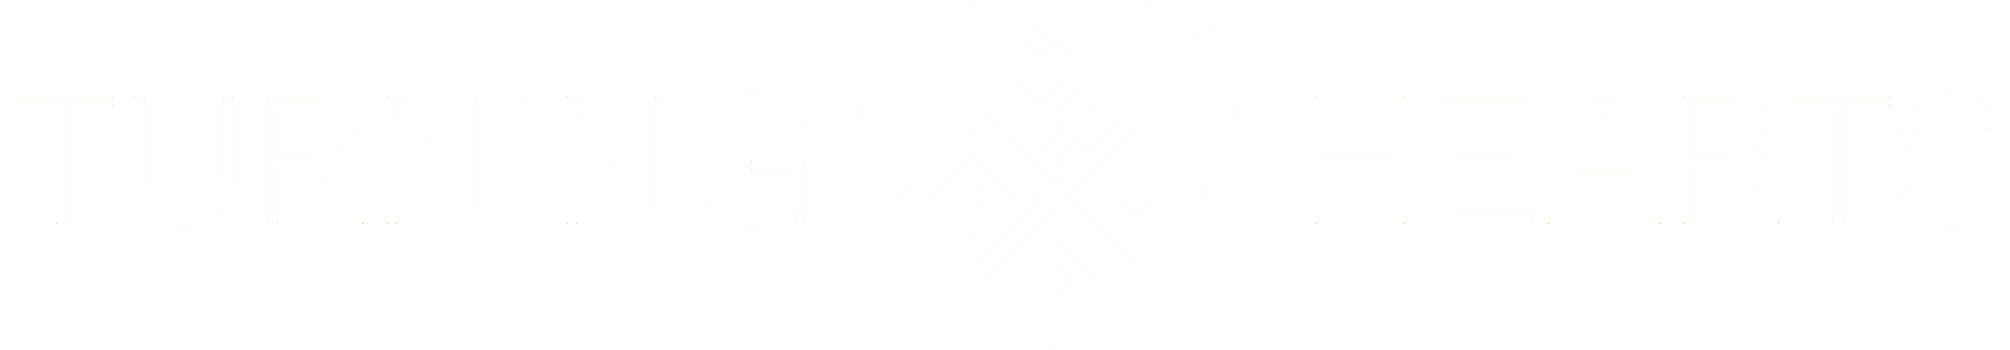 Turning Hearts logo